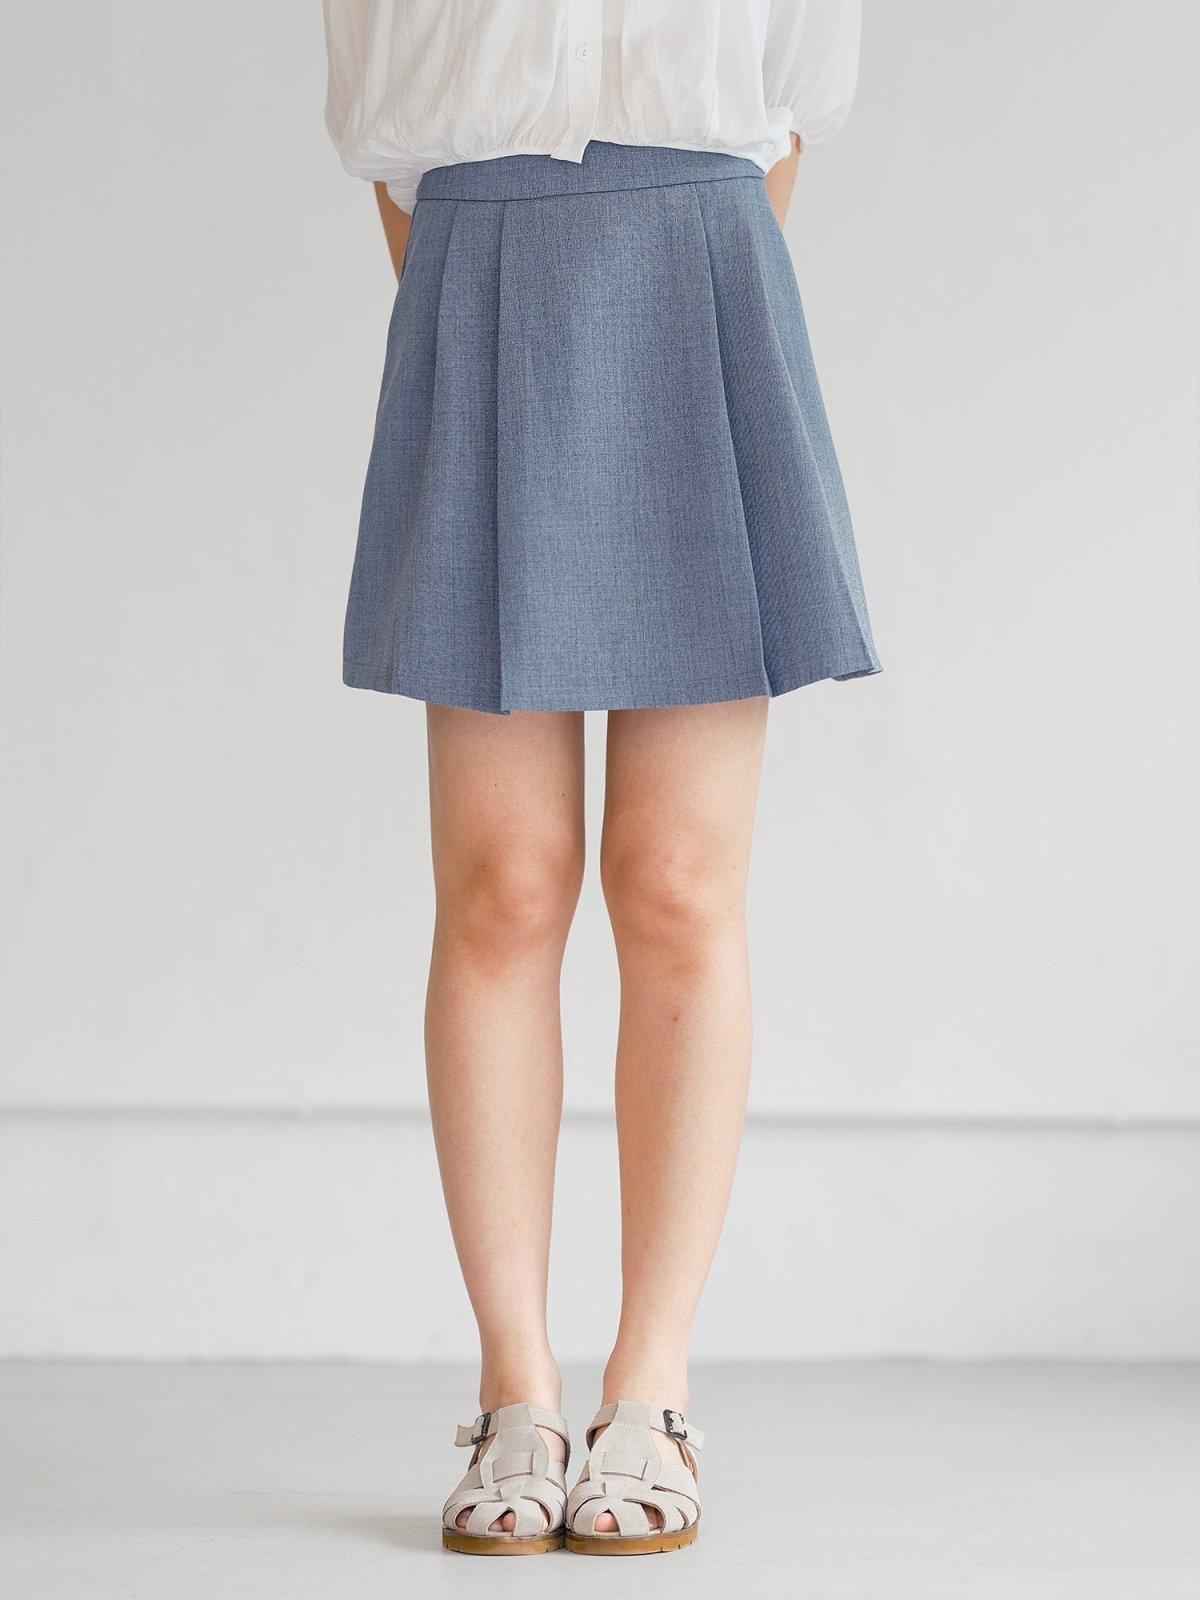 Simea Pleated Mini Skirt - DAG-G-220159BLUES - Blue - S - D'zage Designs